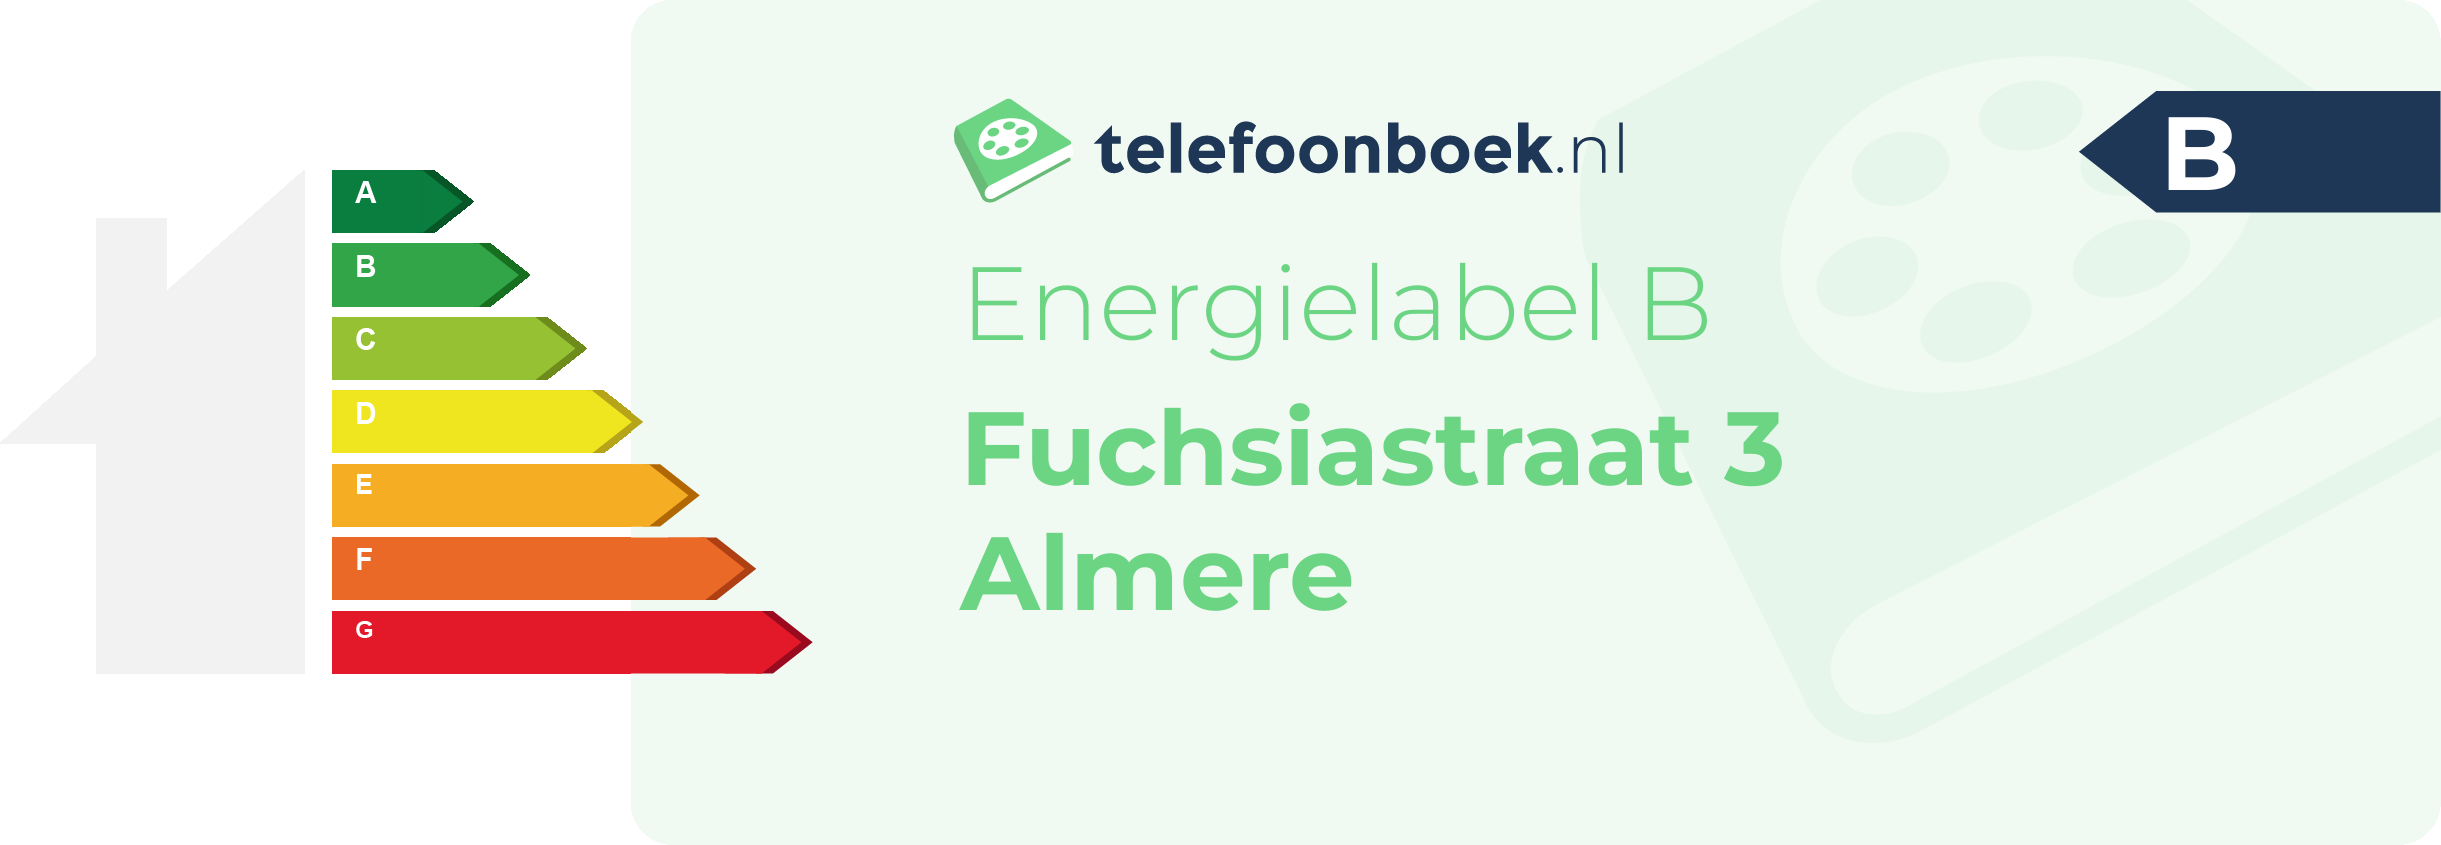 Energielabel Fuchsiastraat 3 Almere